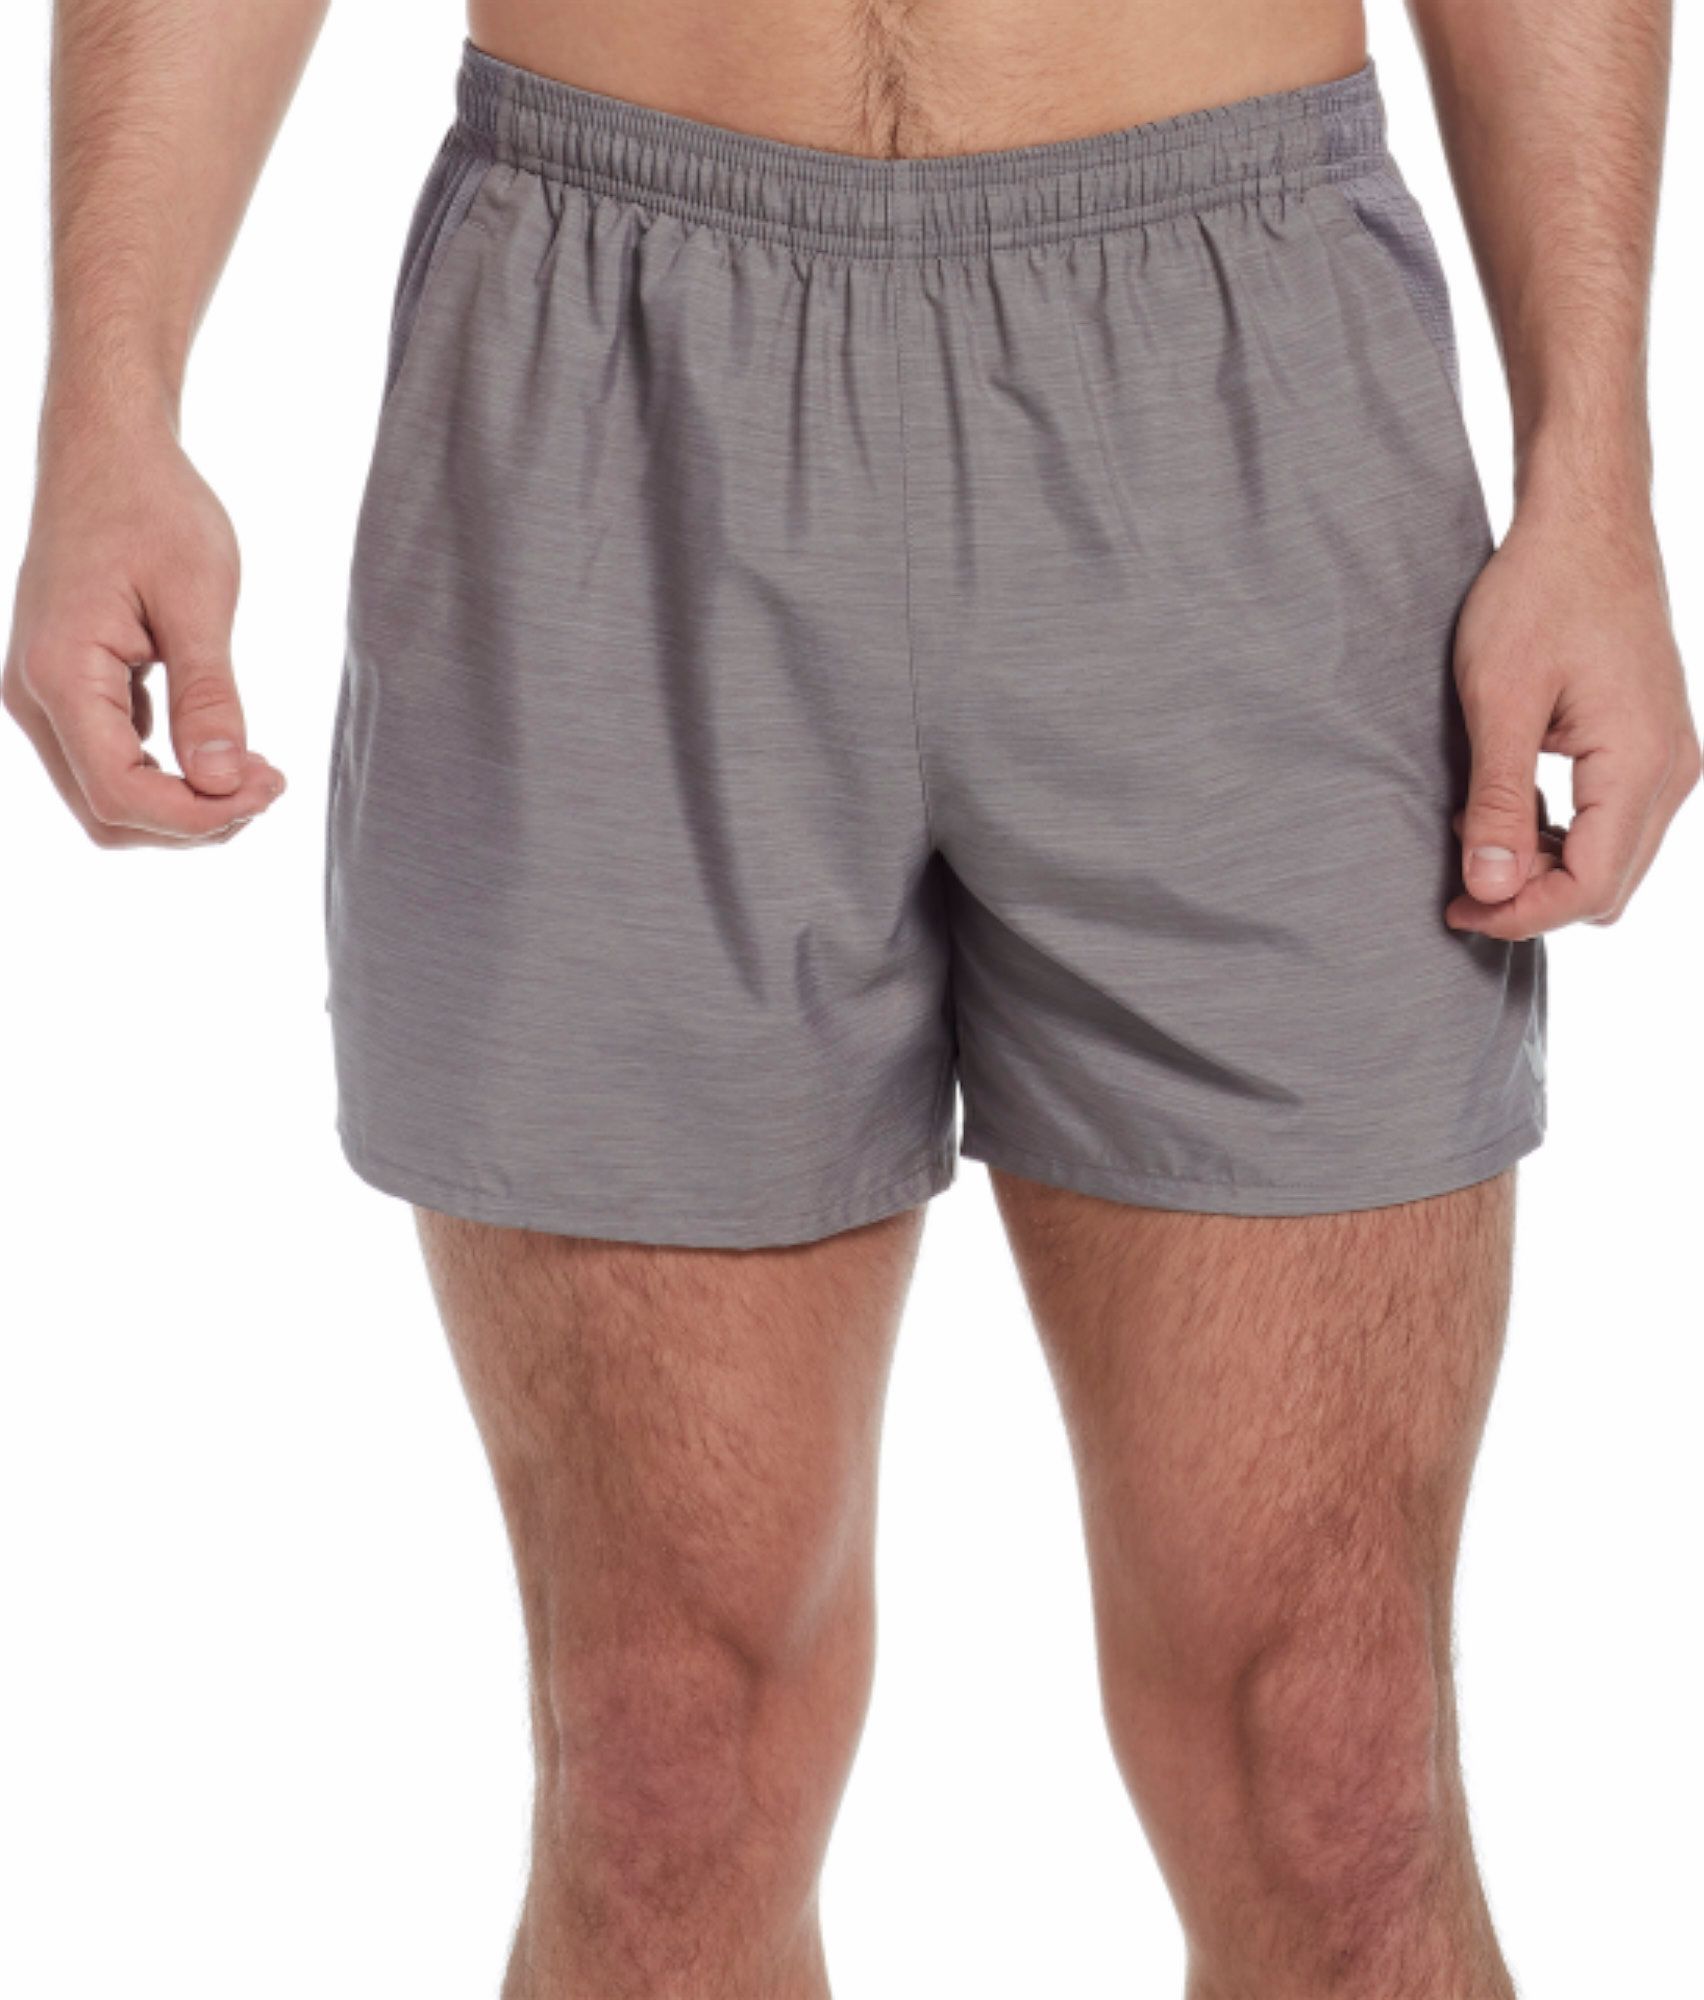 5 inch inseam shorts mens nike